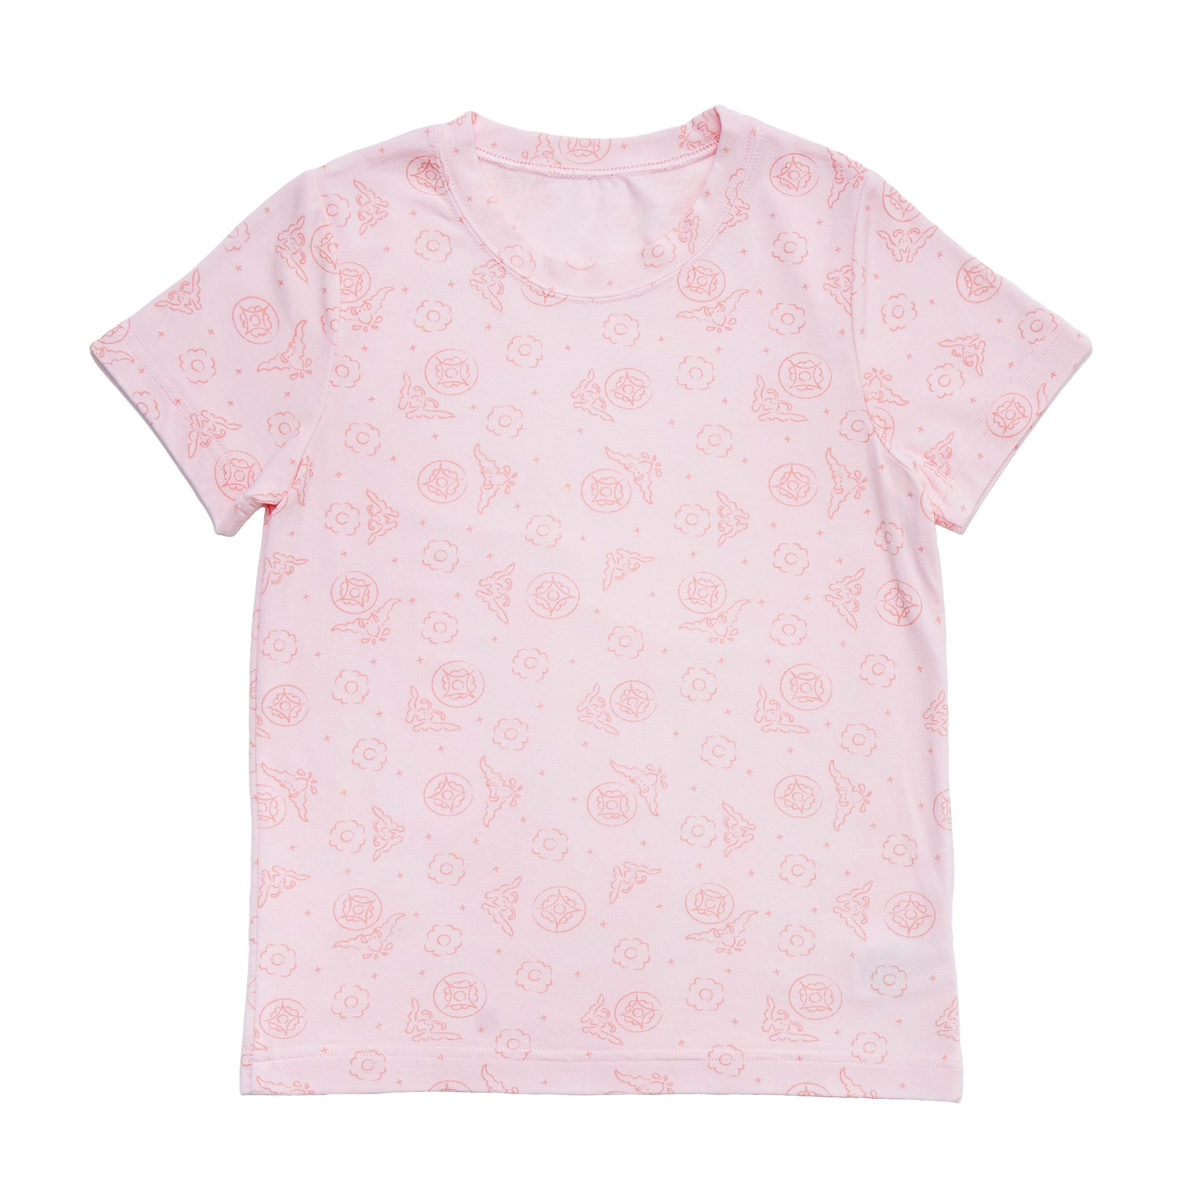 <tc>Kids cooling feeling Short Sleeve T-Shirt with Bat print (Light Coral)</tc>